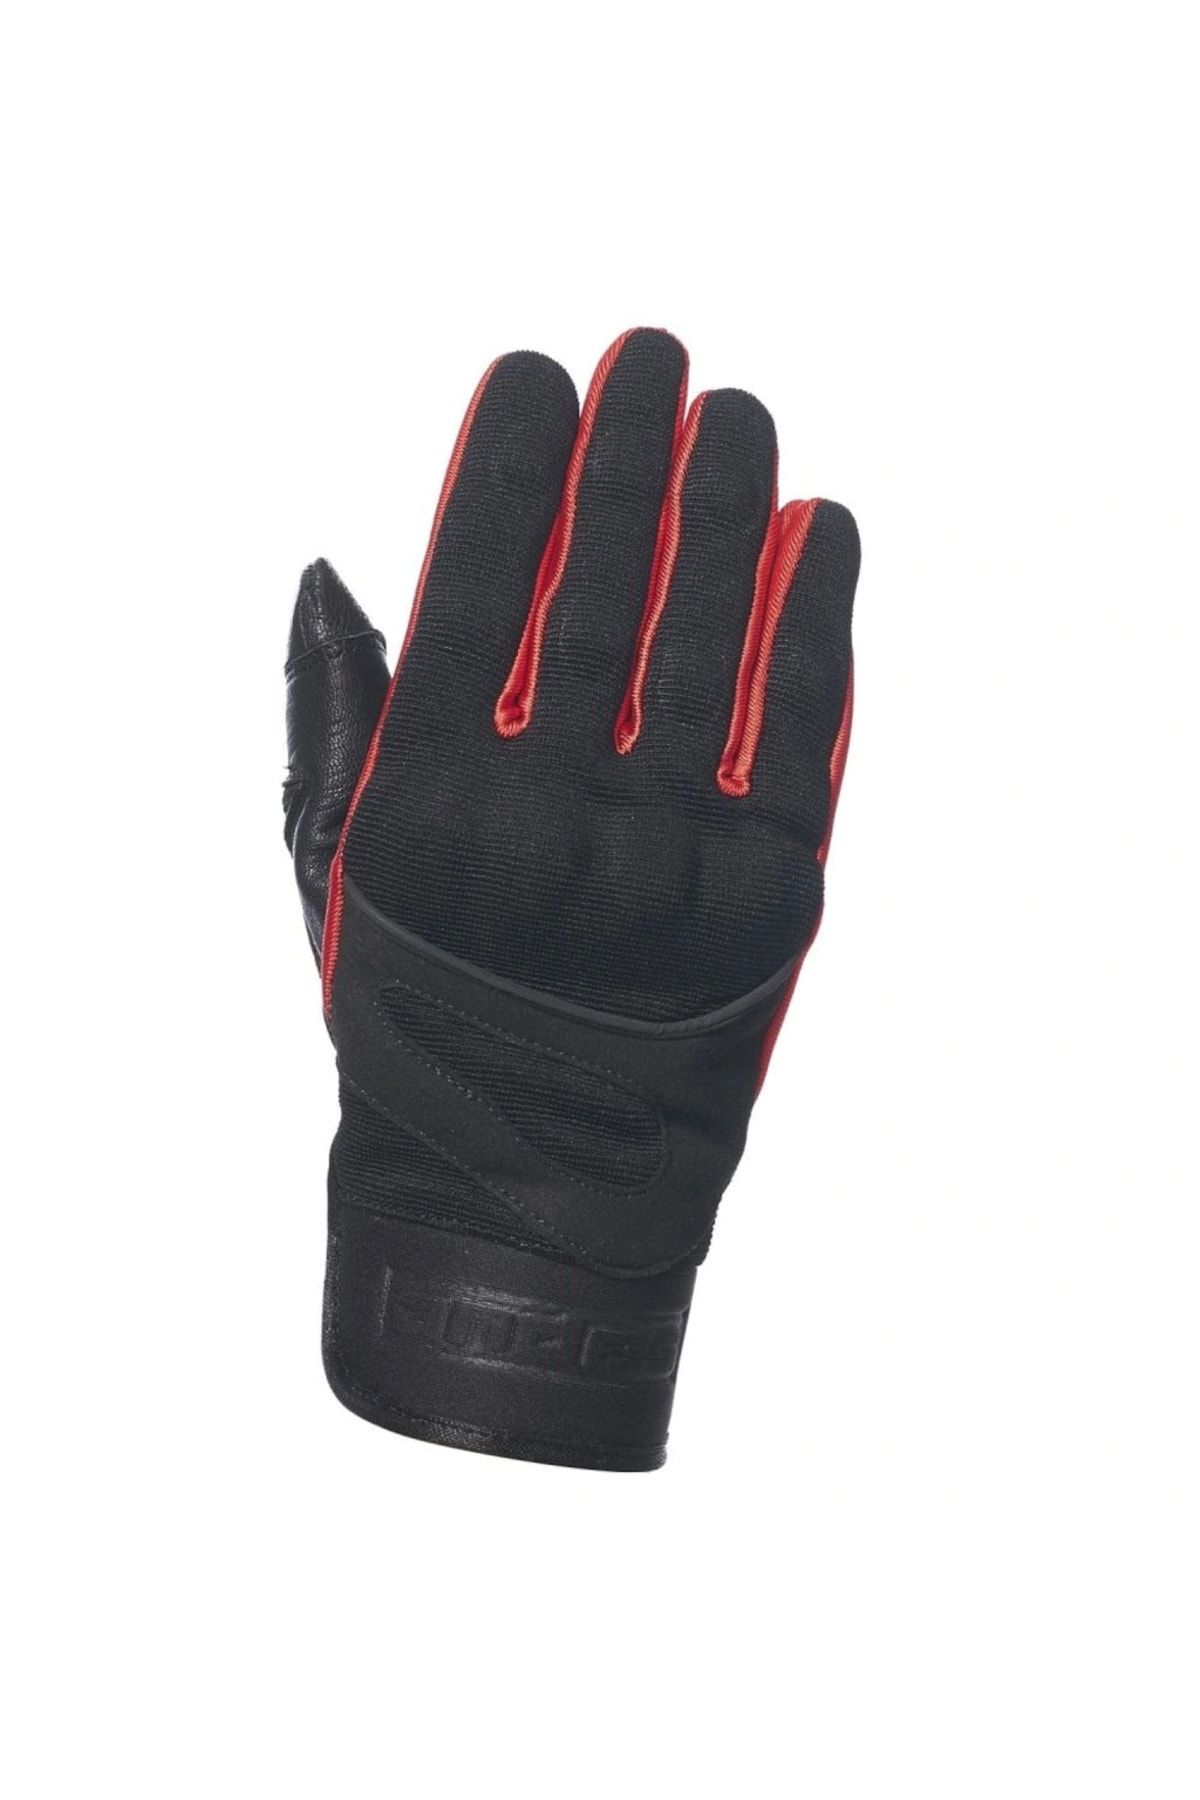 Andes Storm Summer Gloves Yazlık Motosiklet Eldiveni Kırmızı/siyah